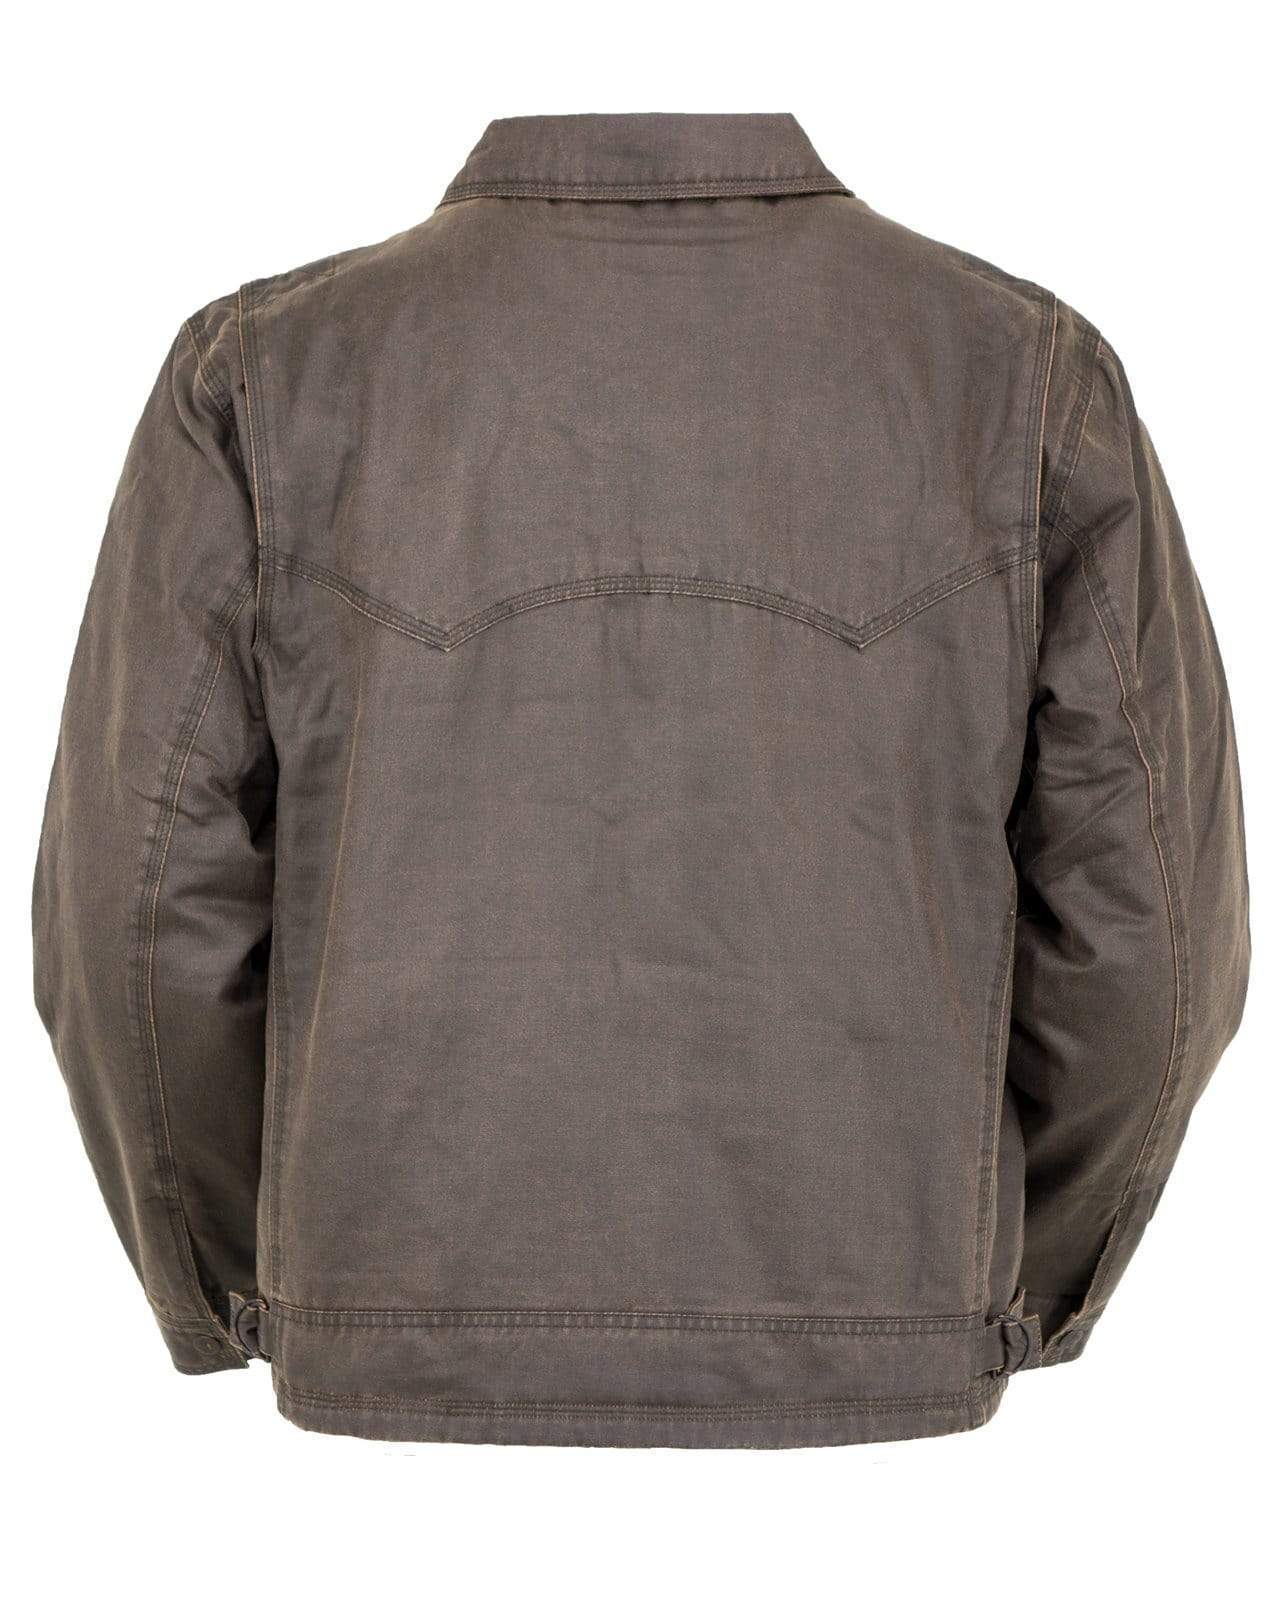 Outback Trading Company Men’s Landsman Jacket Coats & Jackets